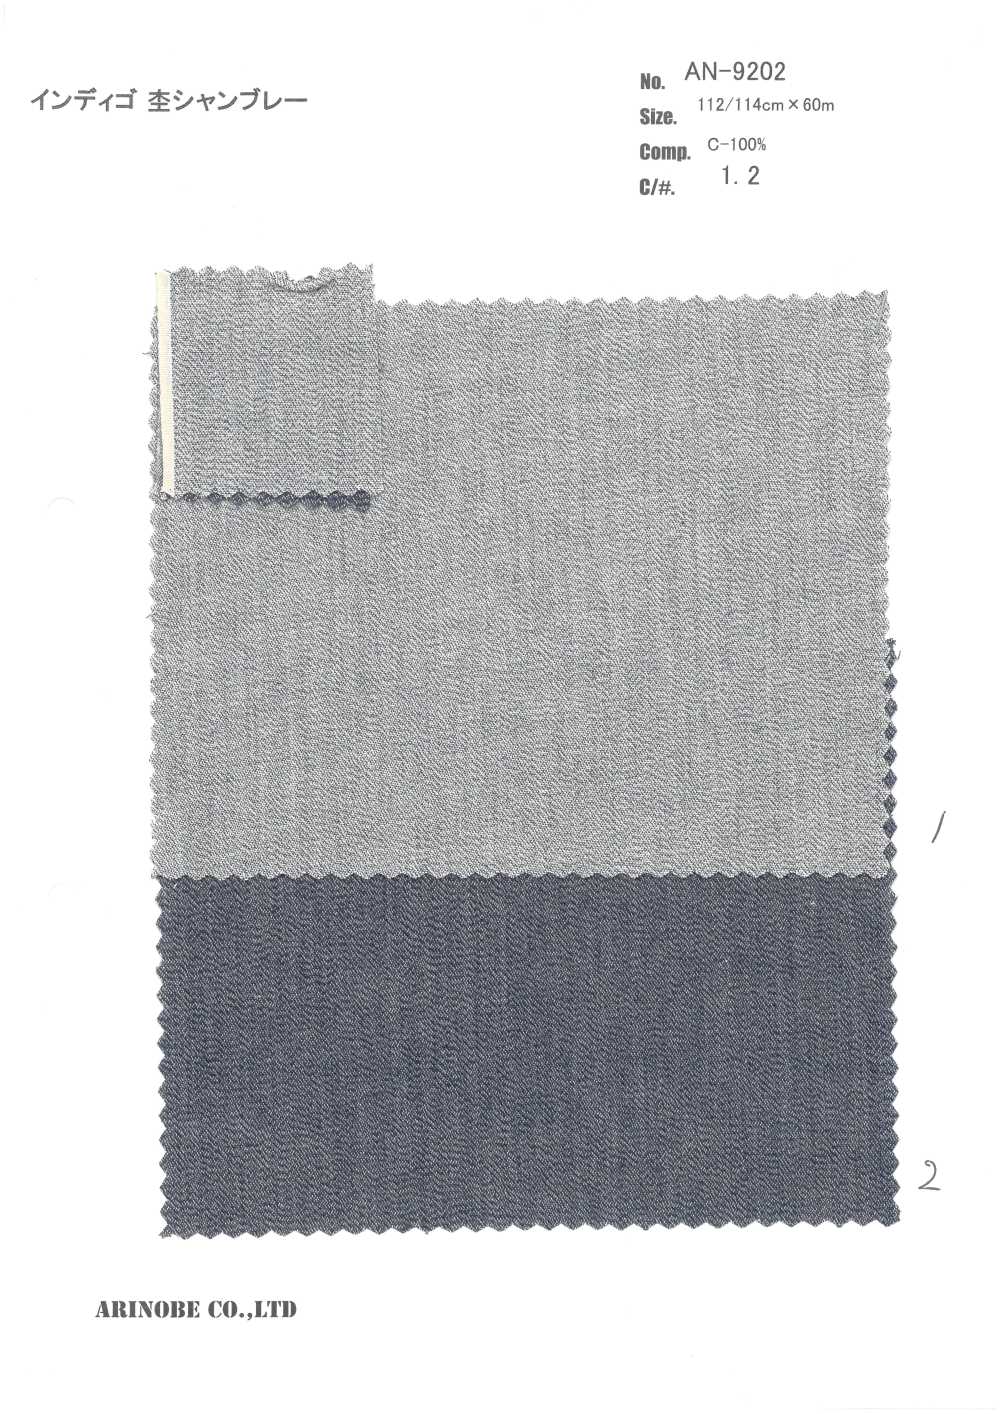 AN-9202 Indigo Heather Chambray[Textile / Fabric] ARINOBE CO., LTD.